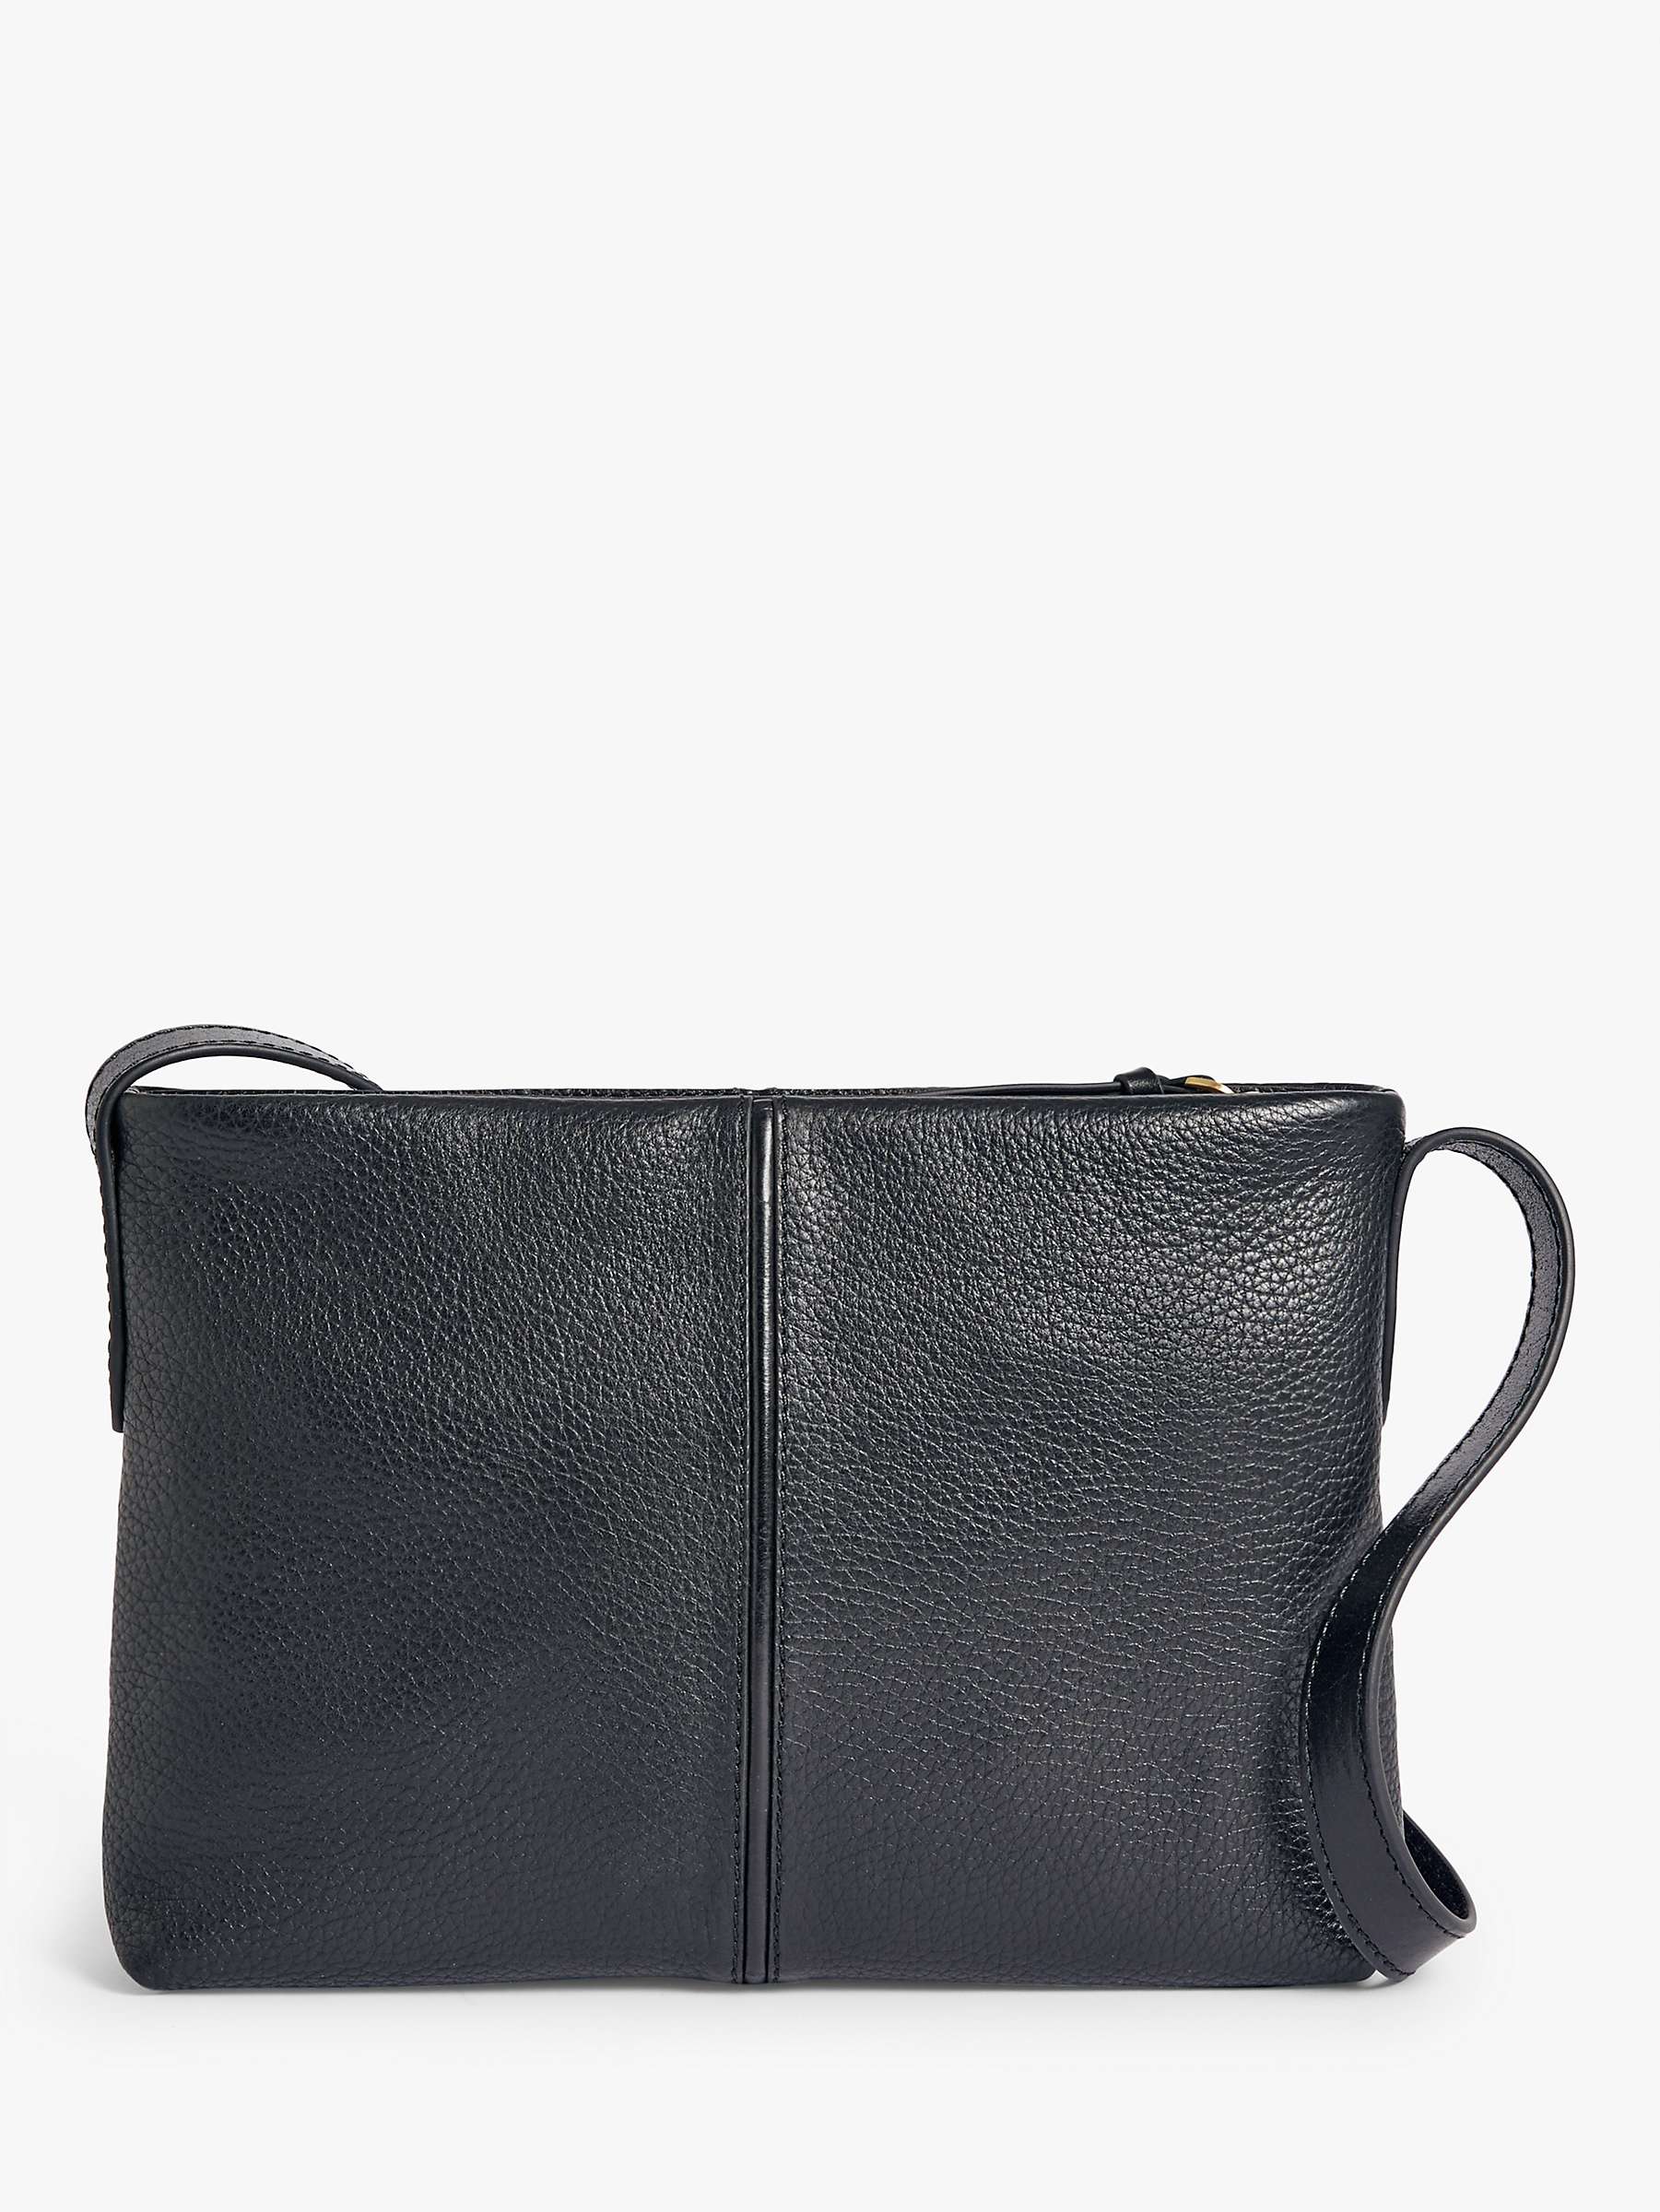 John Lewis Leather Simple Zip Shoulder Bag, Black at John Lewis & Partners